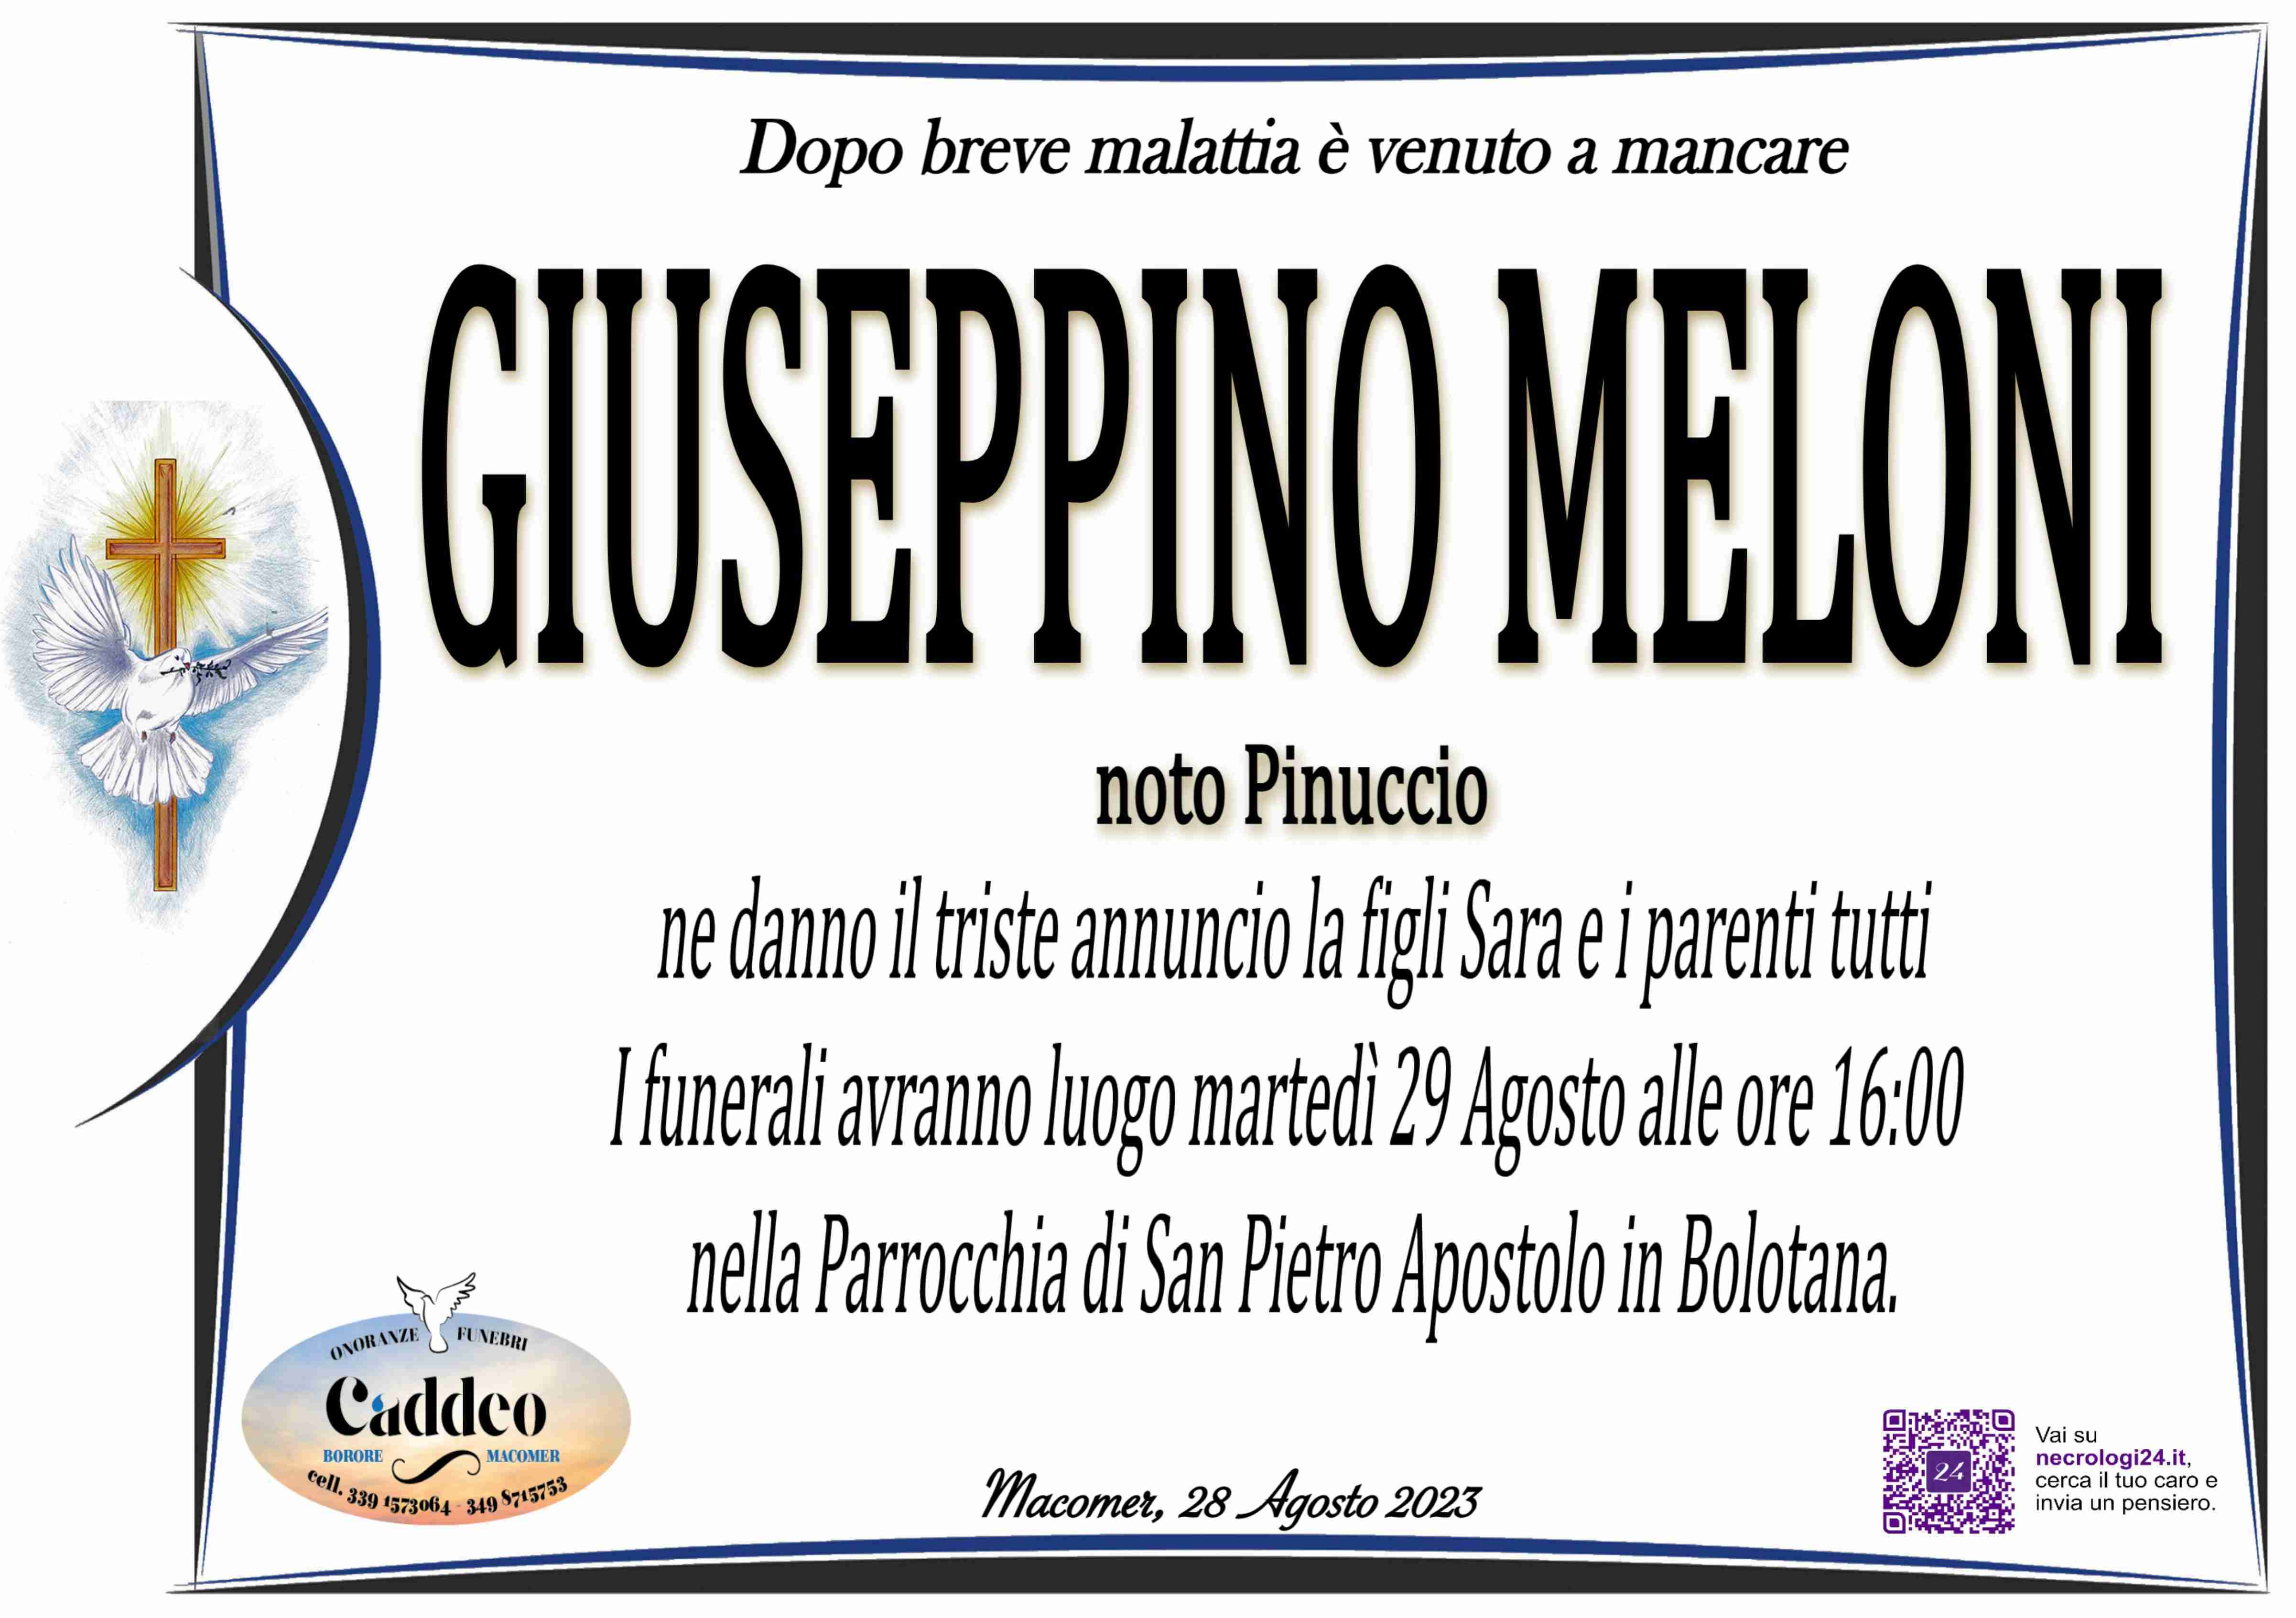 Giuseppino Meloni